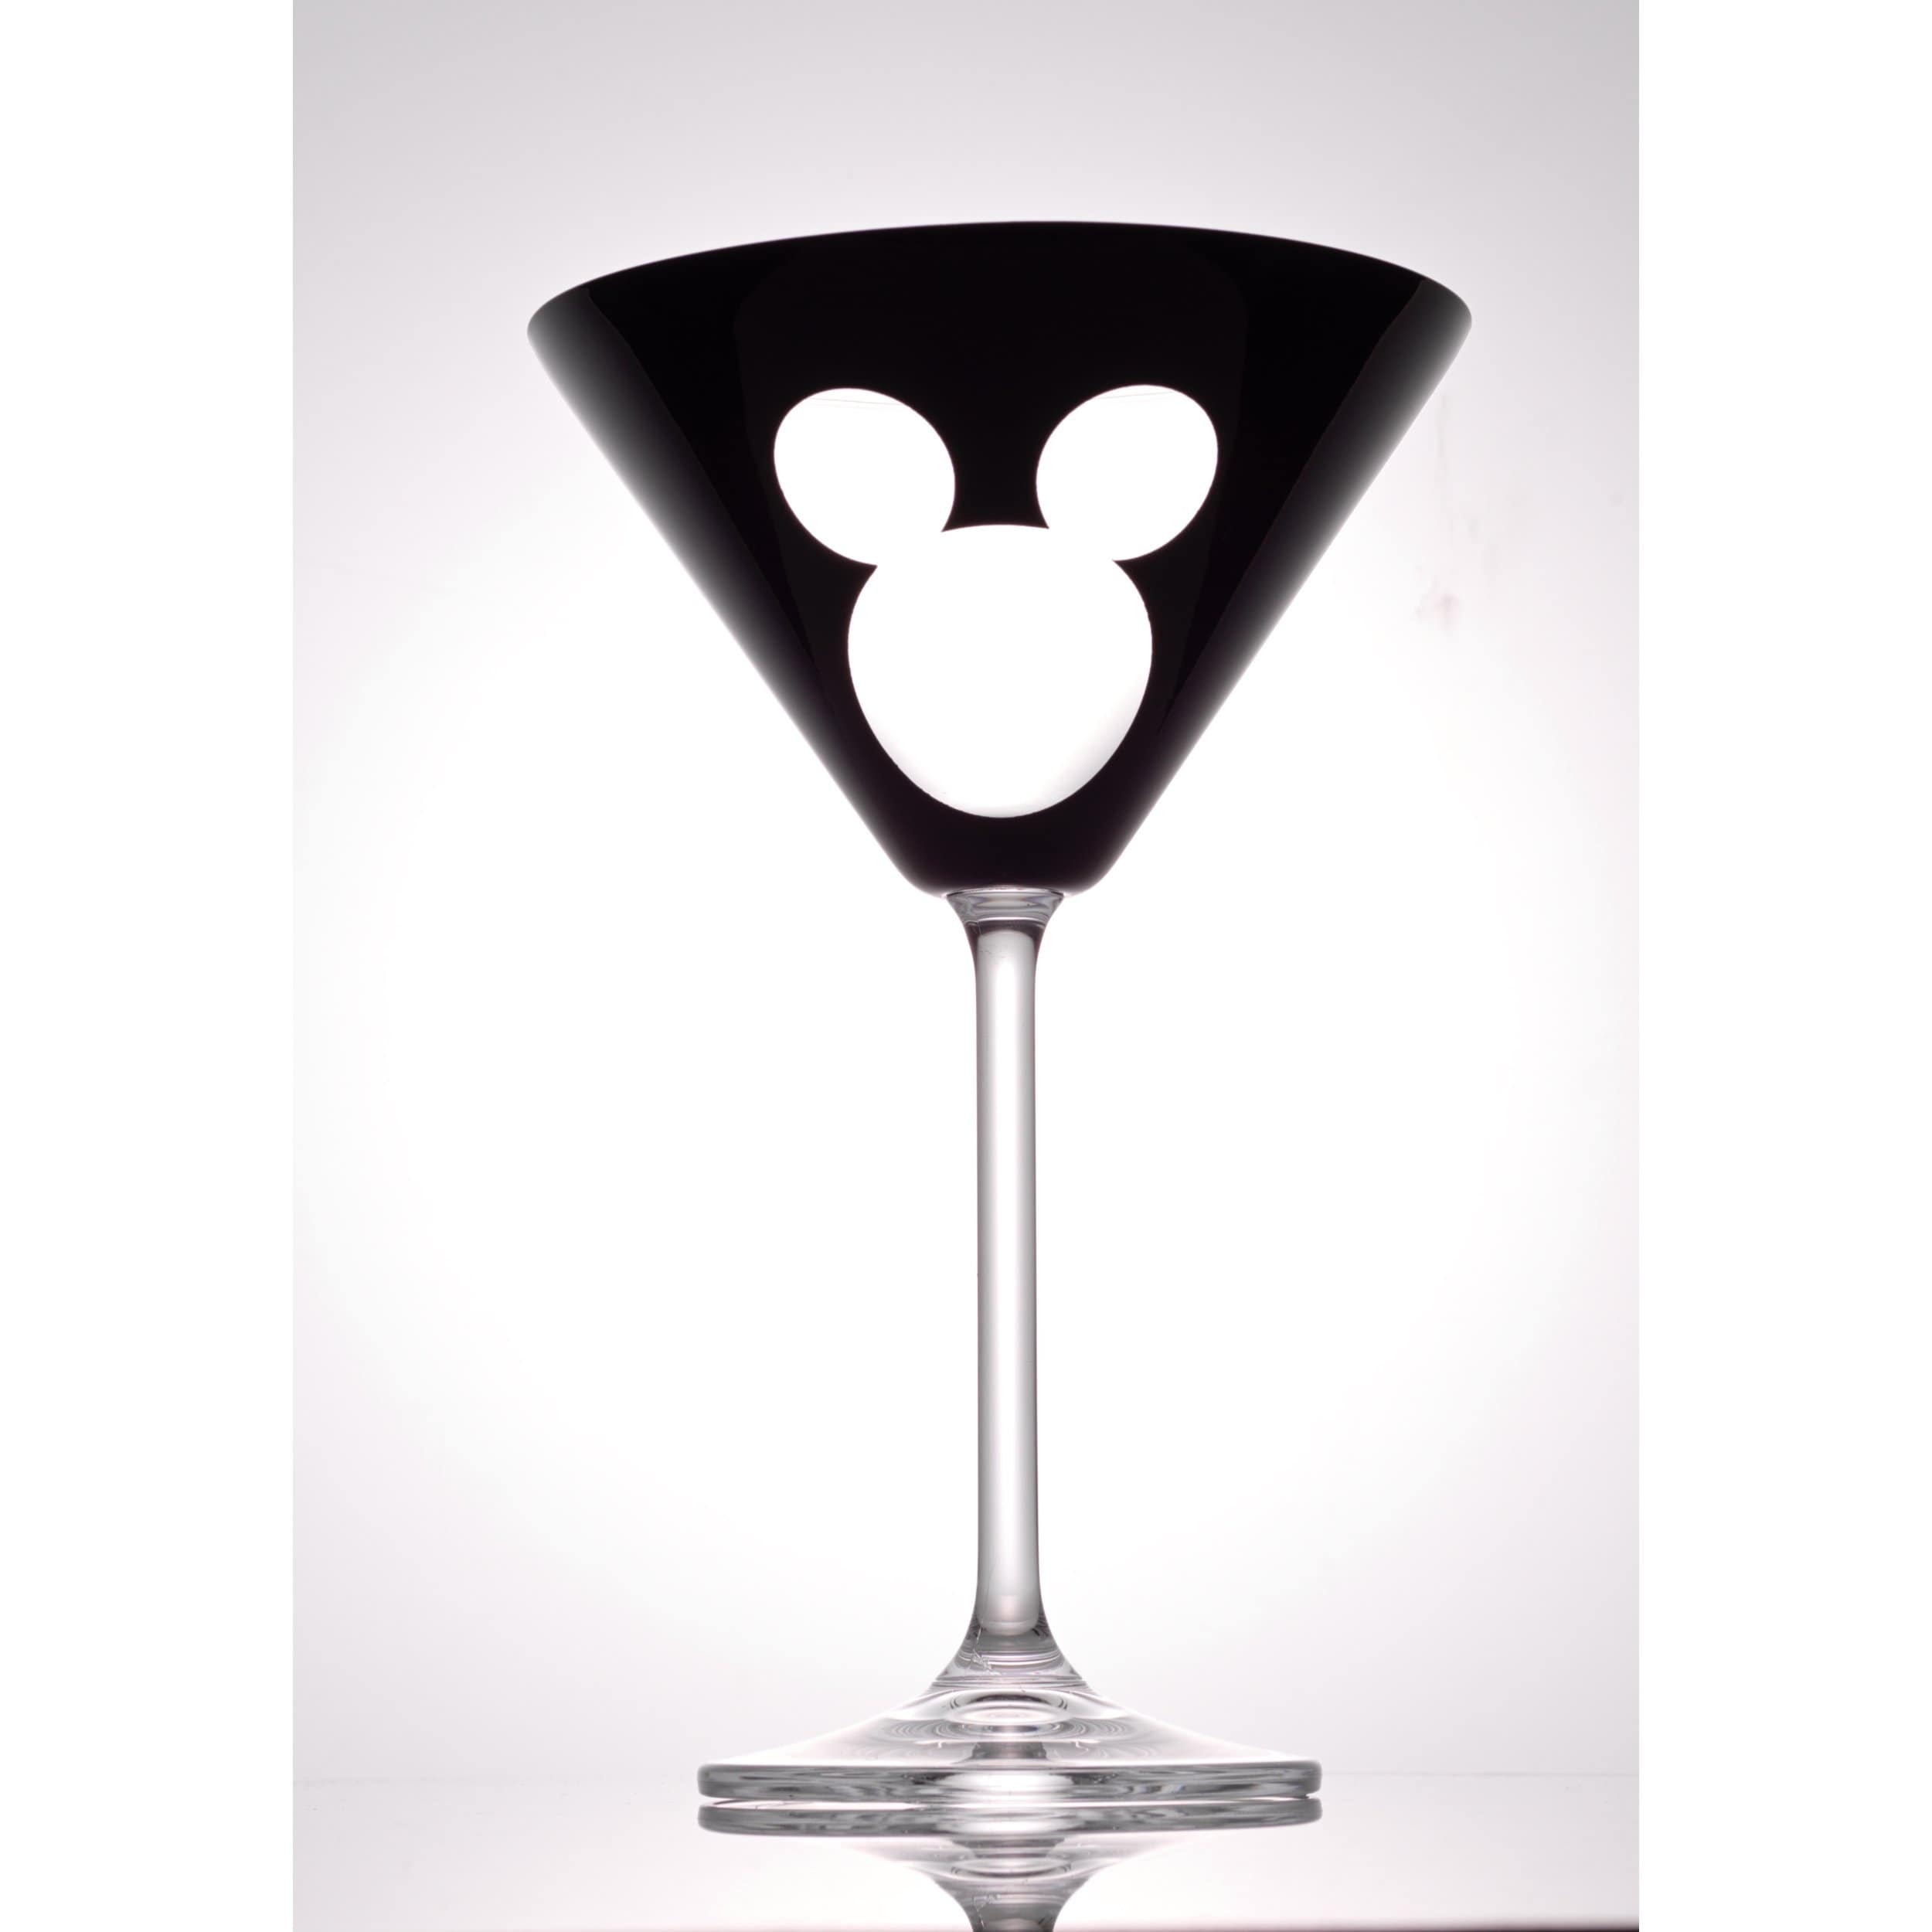 JoyJolt Disney Geo Picnic Mickey Mouse 15 Oz Stemless Wine Glasses Set, 4  Pieces - ShopStyle